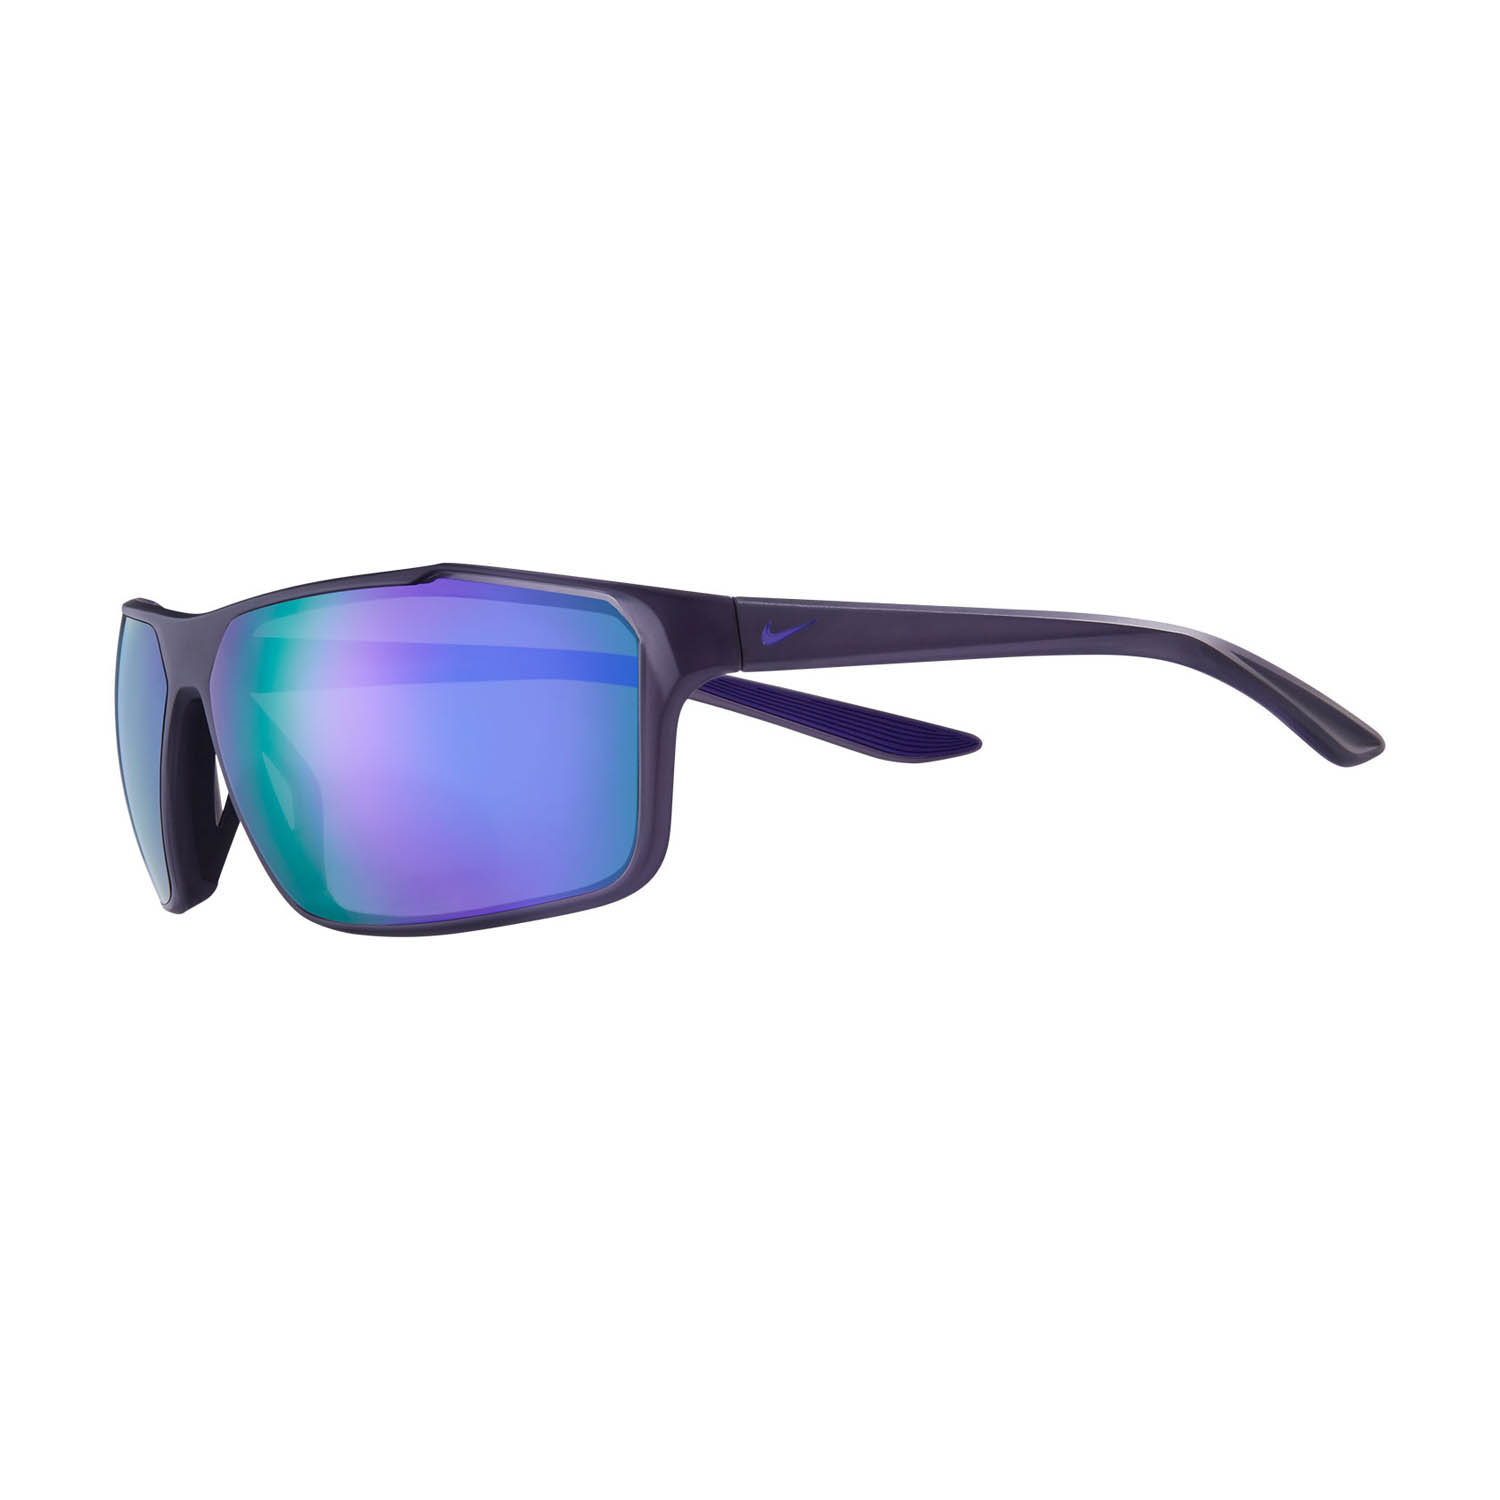 Nike Windstorm Sunglasses - Matte Gridiron/Psychic Purple/Grey W/Violet Mirror Lens